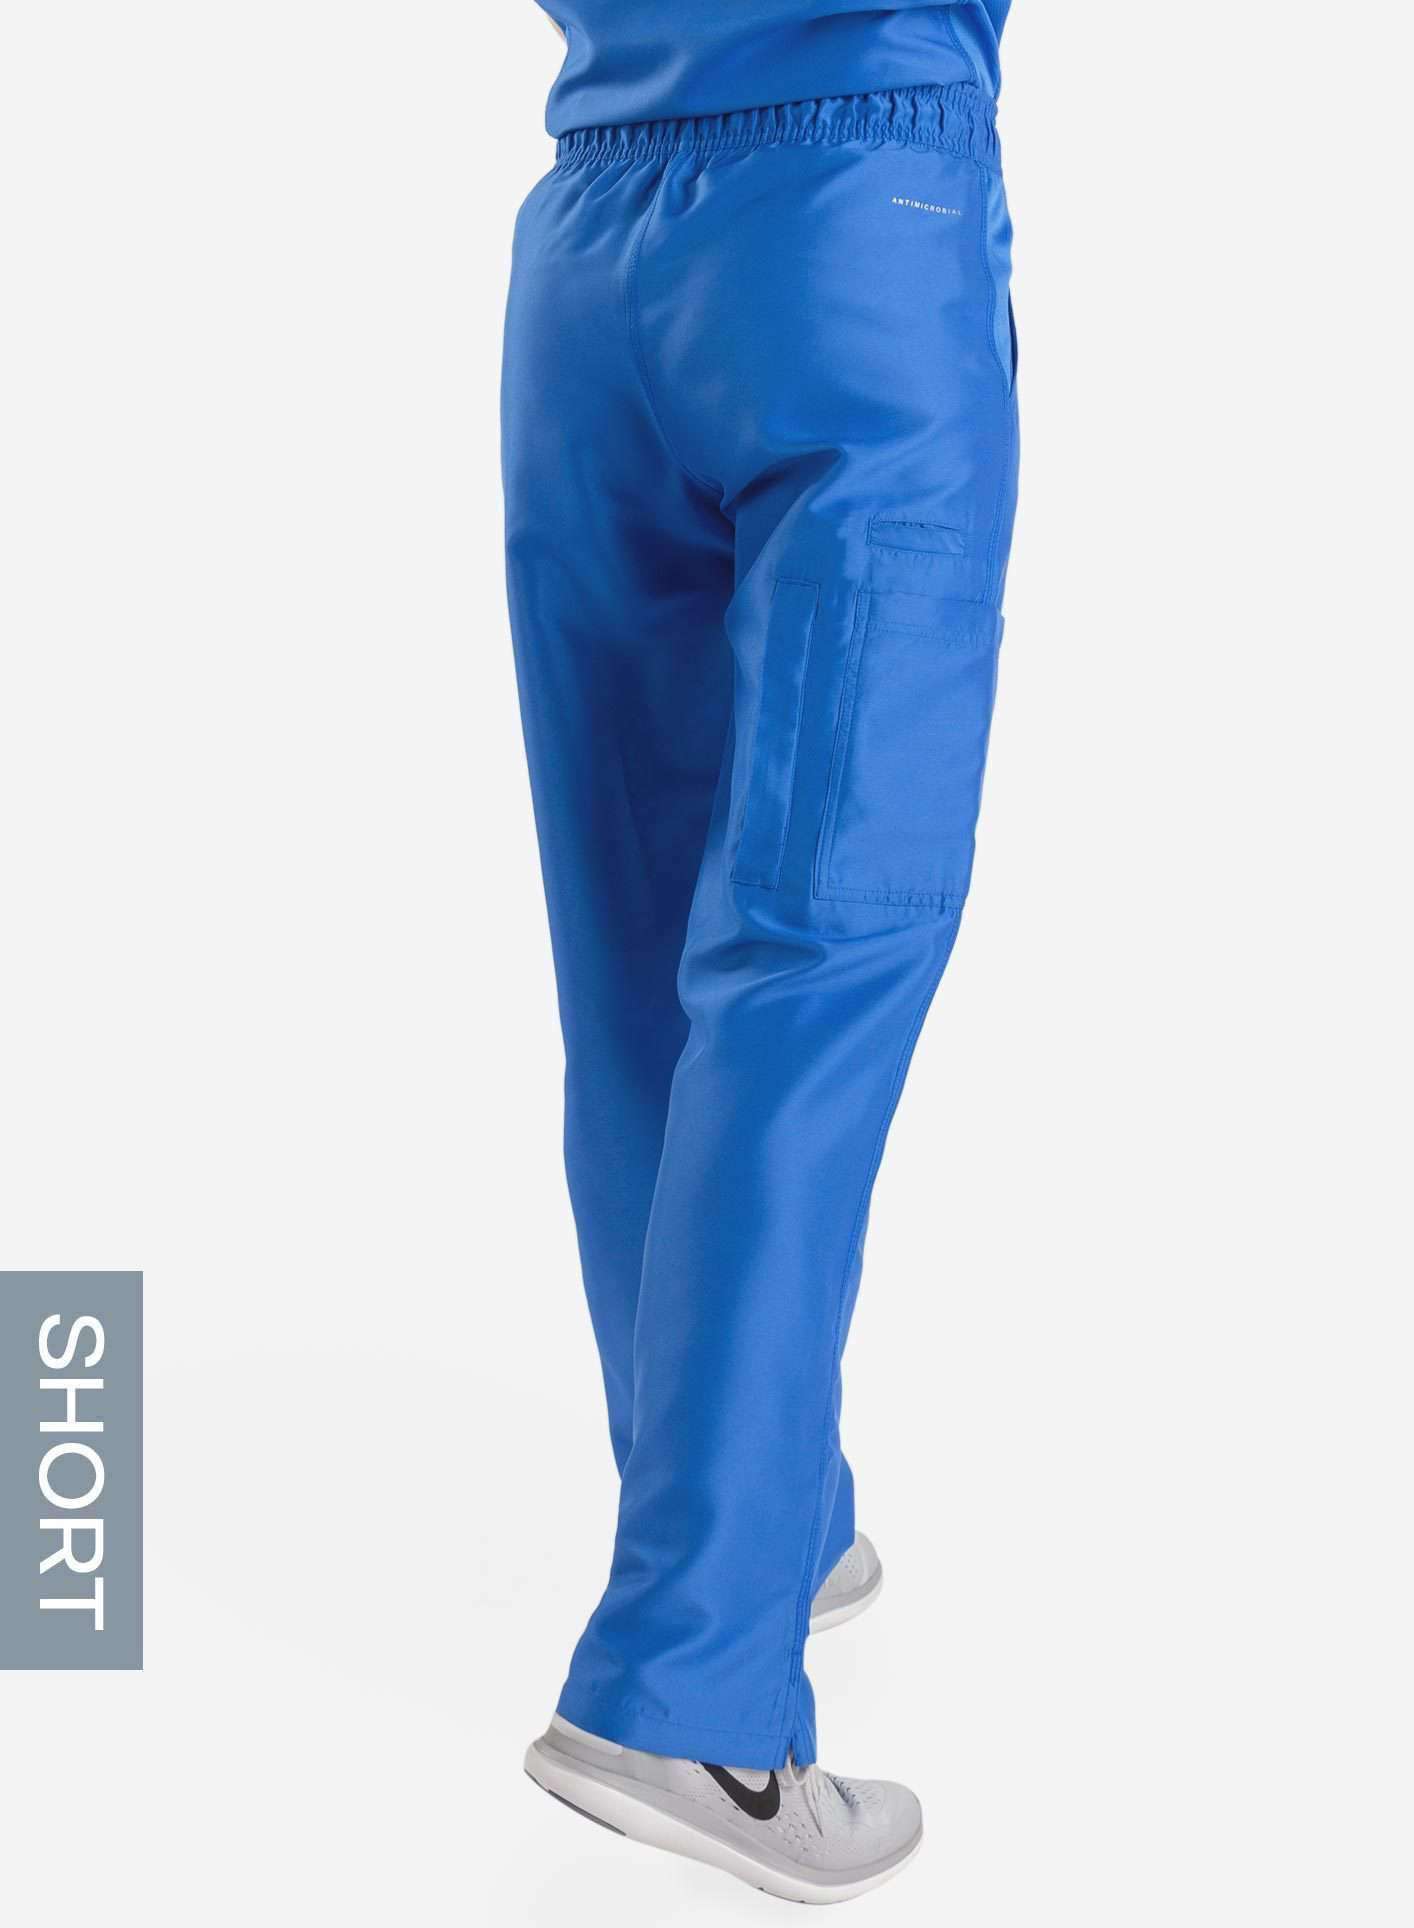 womens short cargo pocket straight leg scrub pants royal-blue 